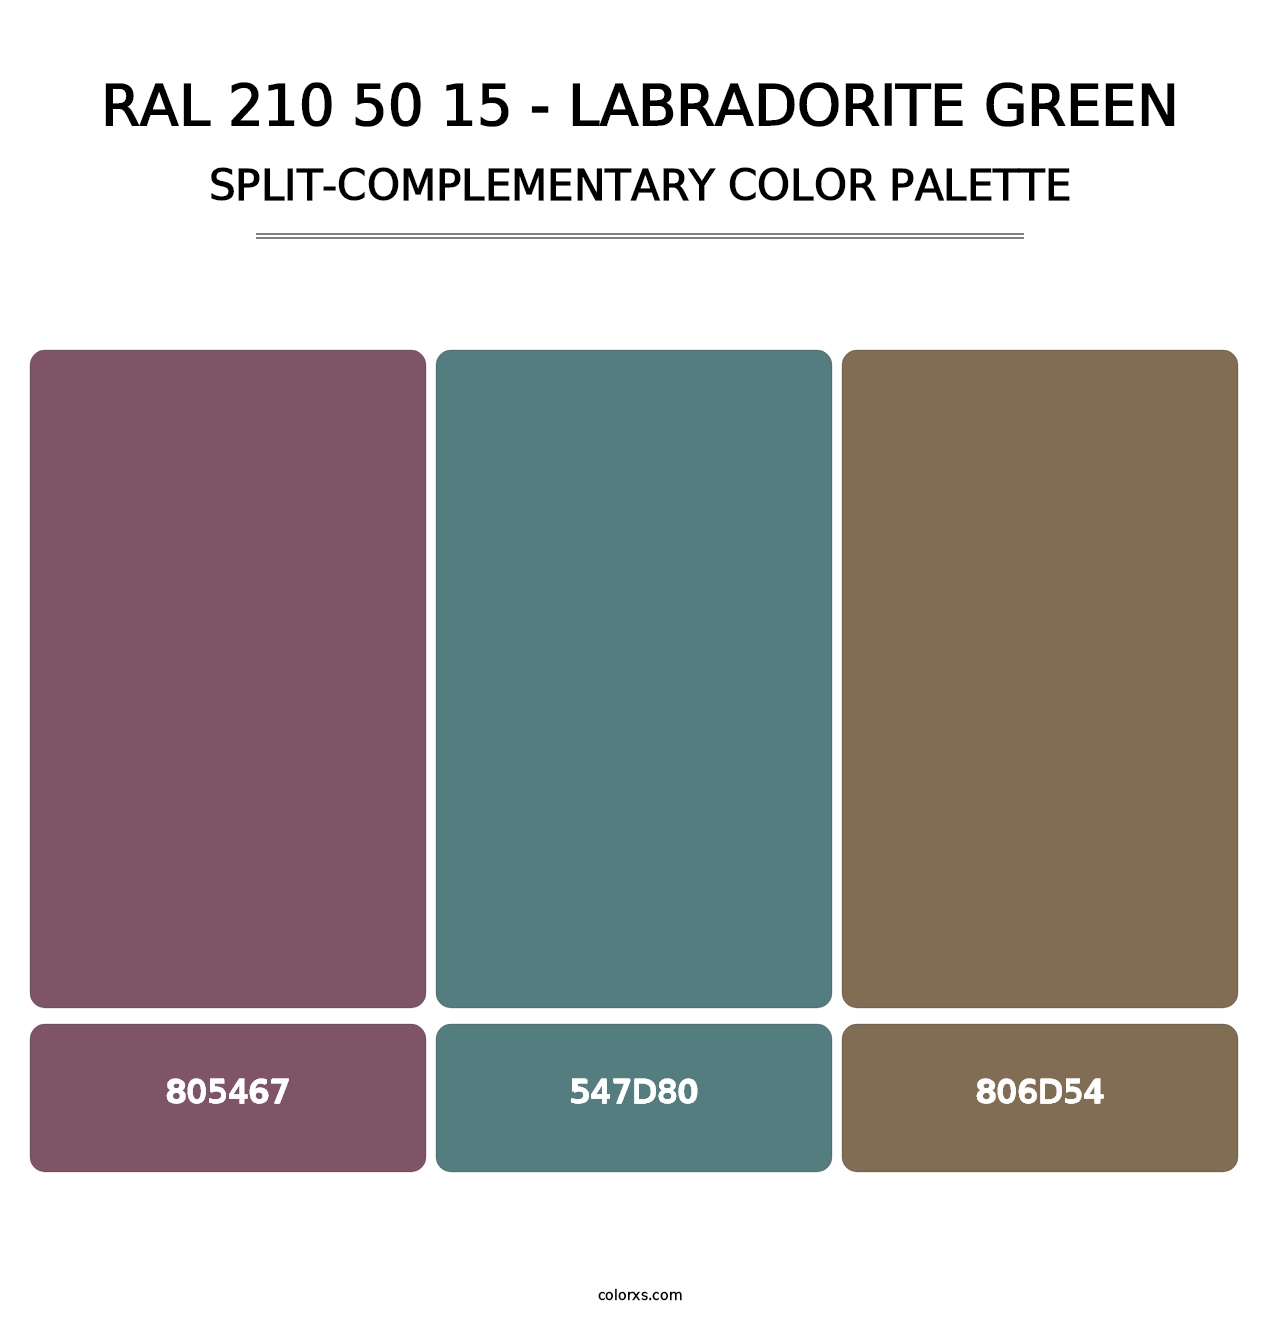 RAL 210 50 15 - Labradorite Green - Split-Complementary Color Palette